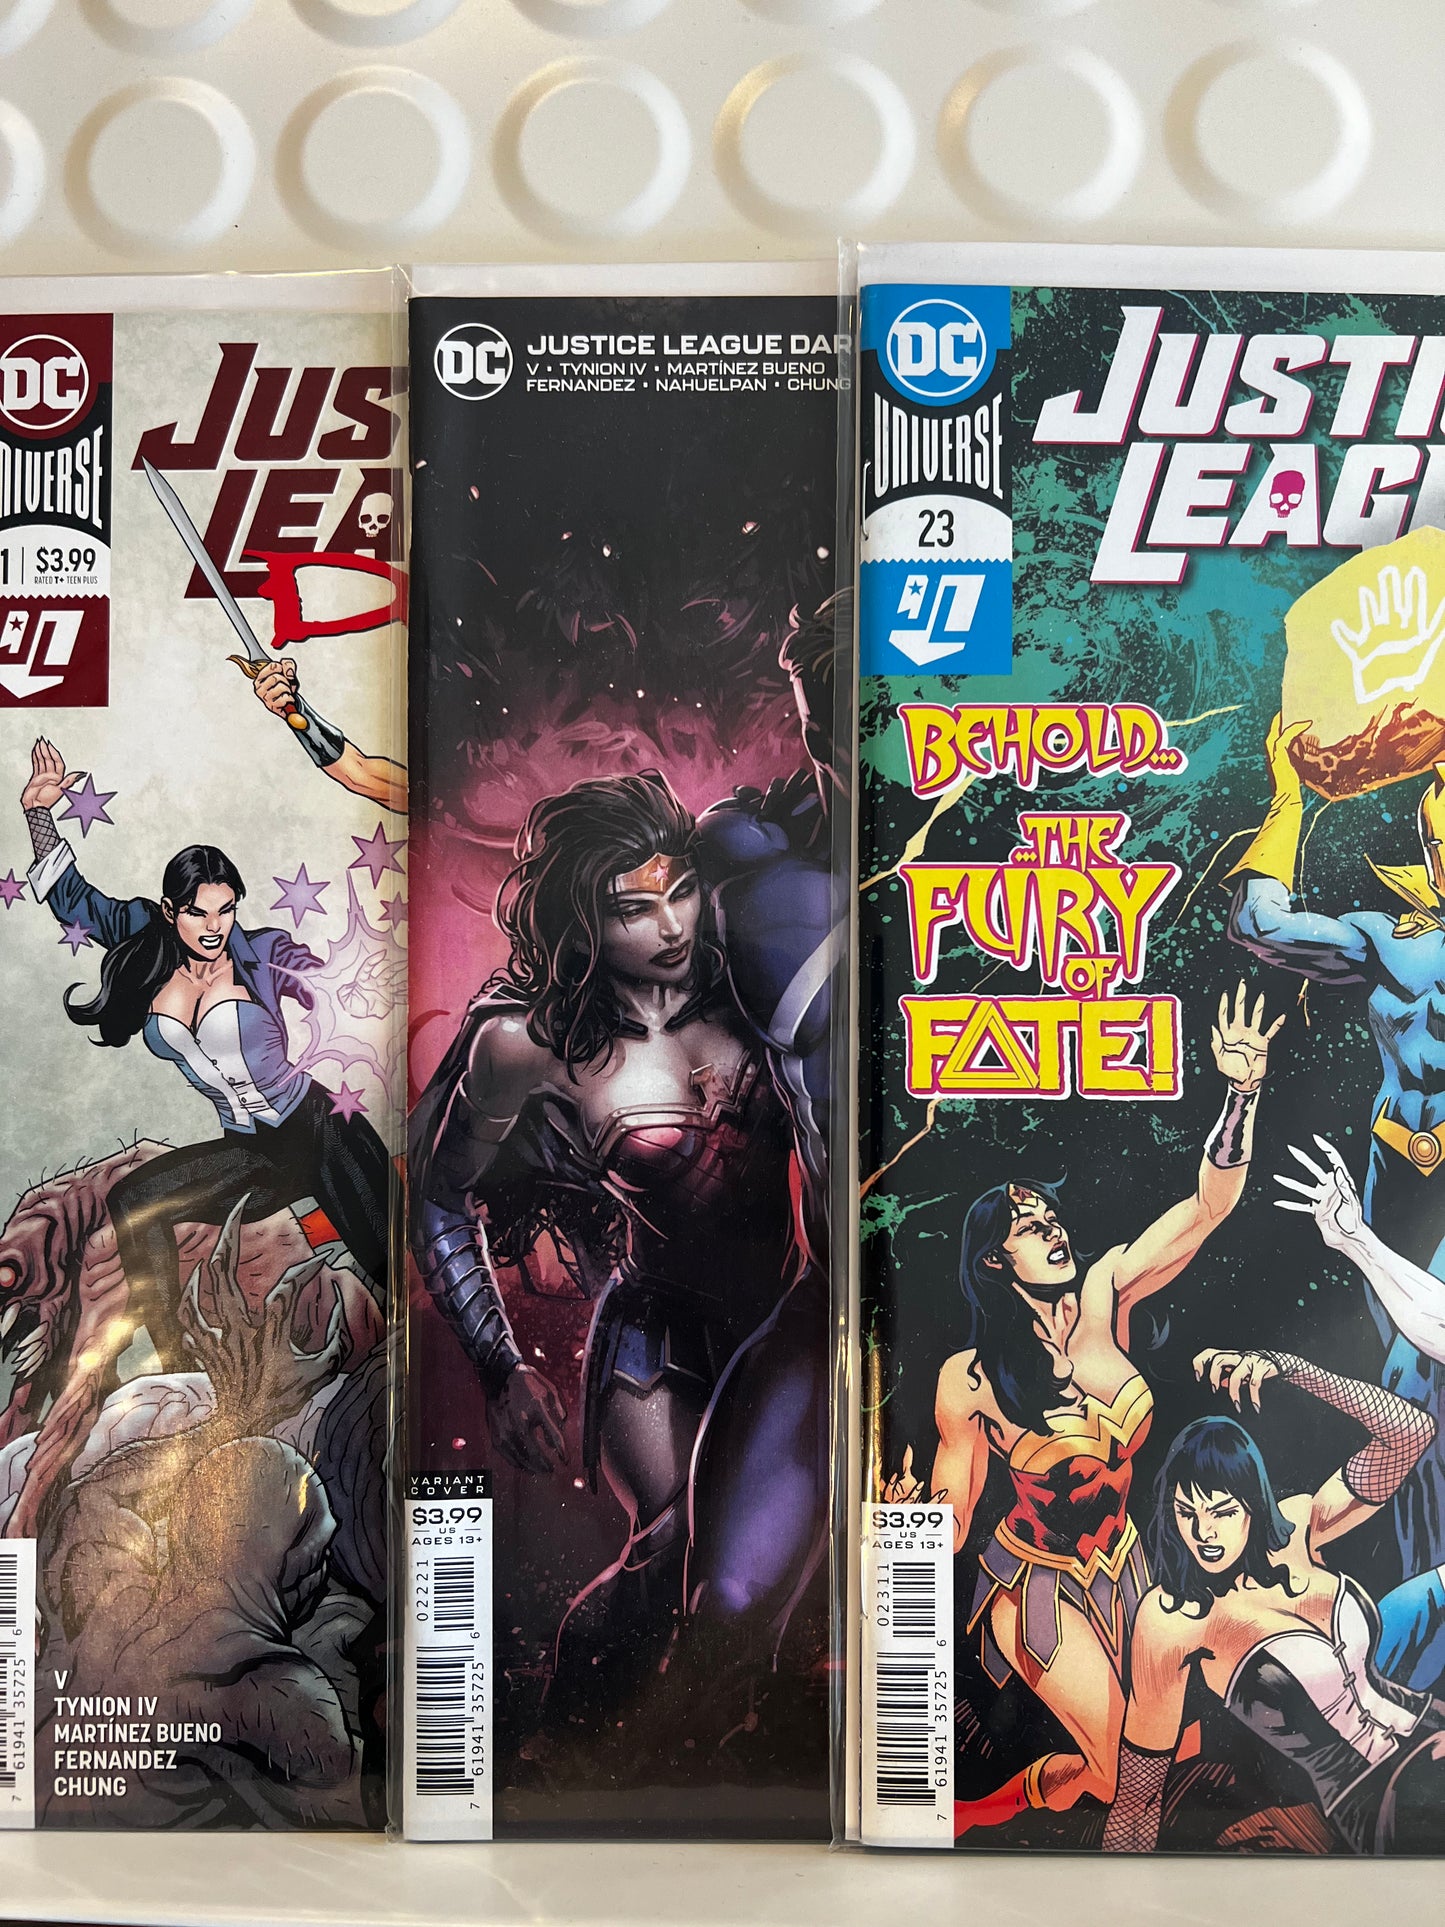 Justice League Dark Vol 2 Complete Signed Bonuses